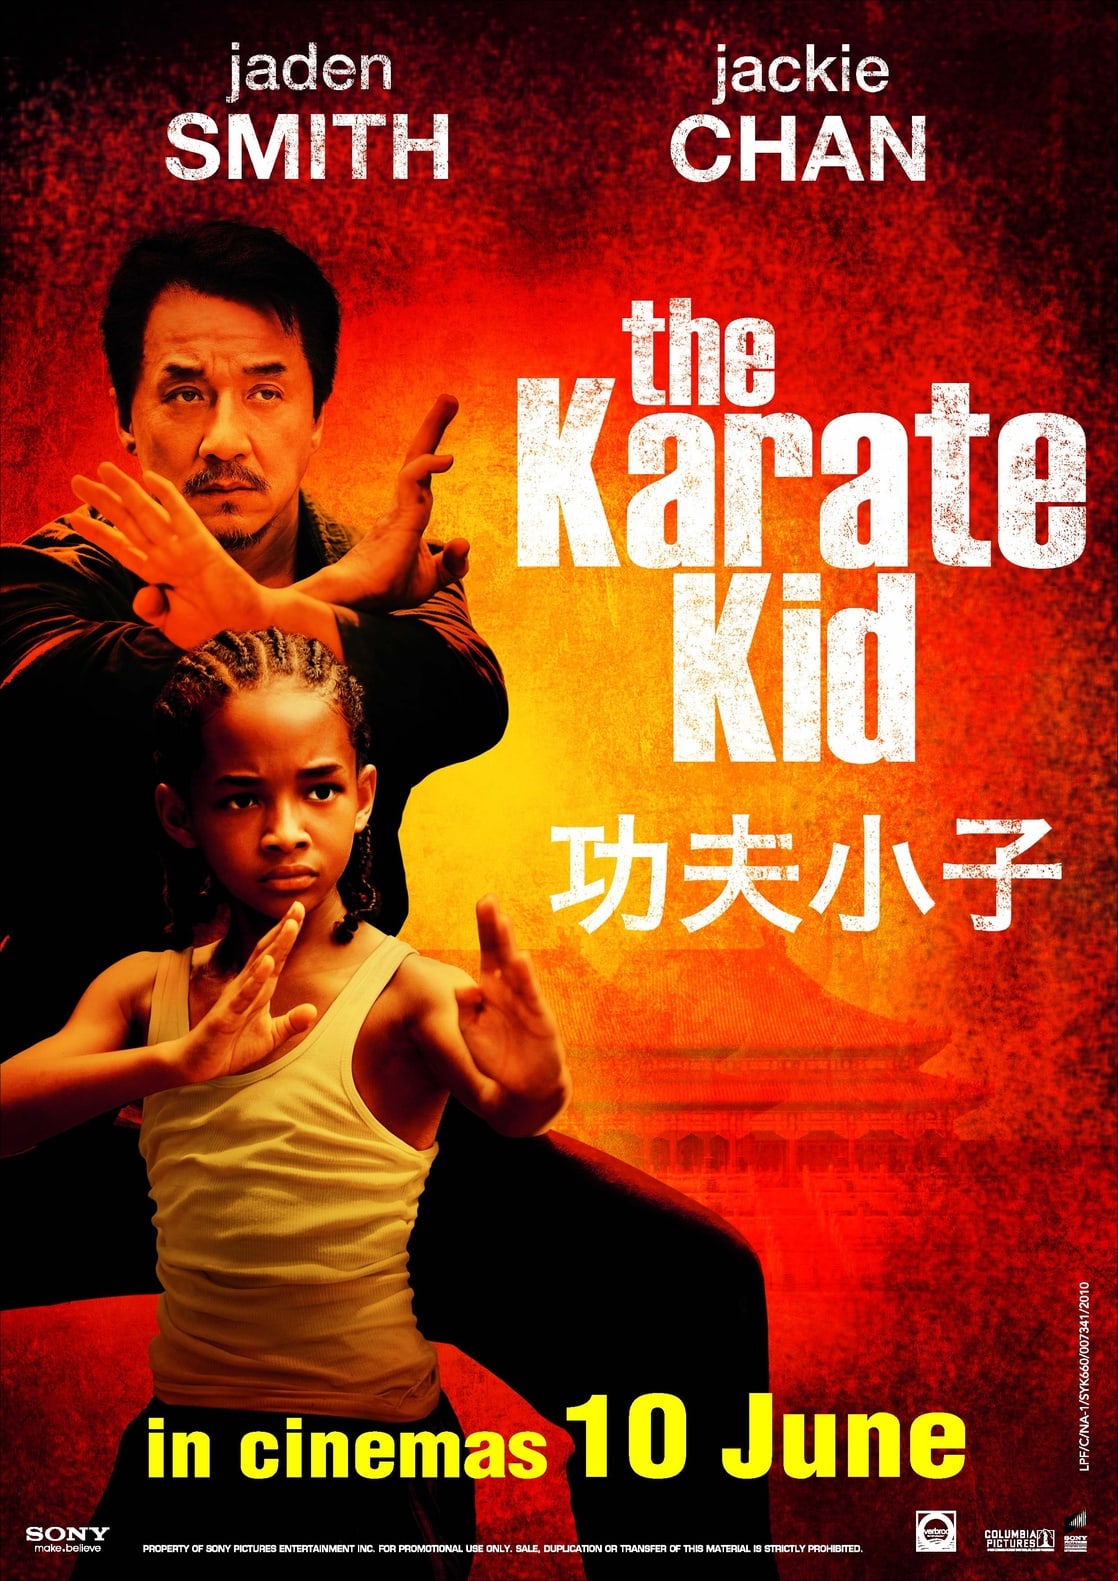 Karate kid full movie in English free download